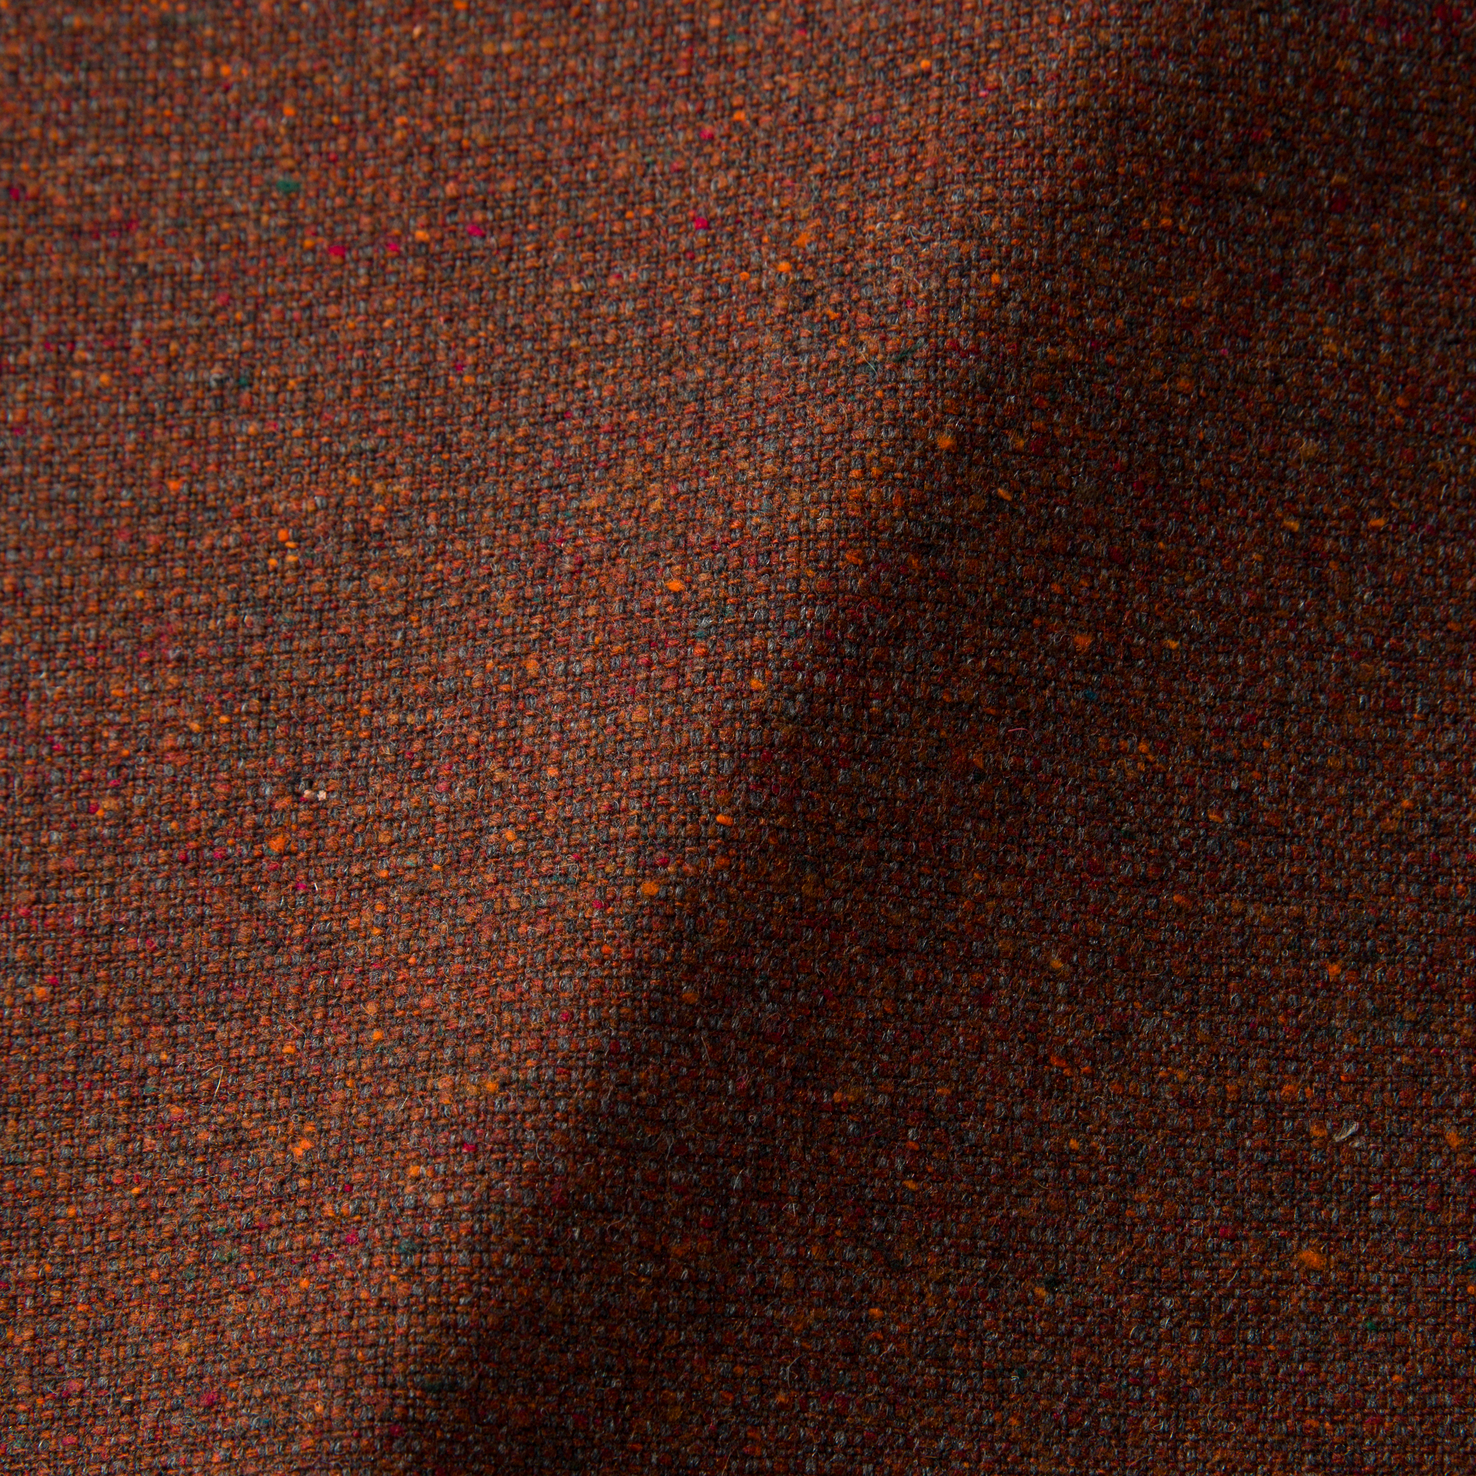 Fabric sample Solis Sunset orange